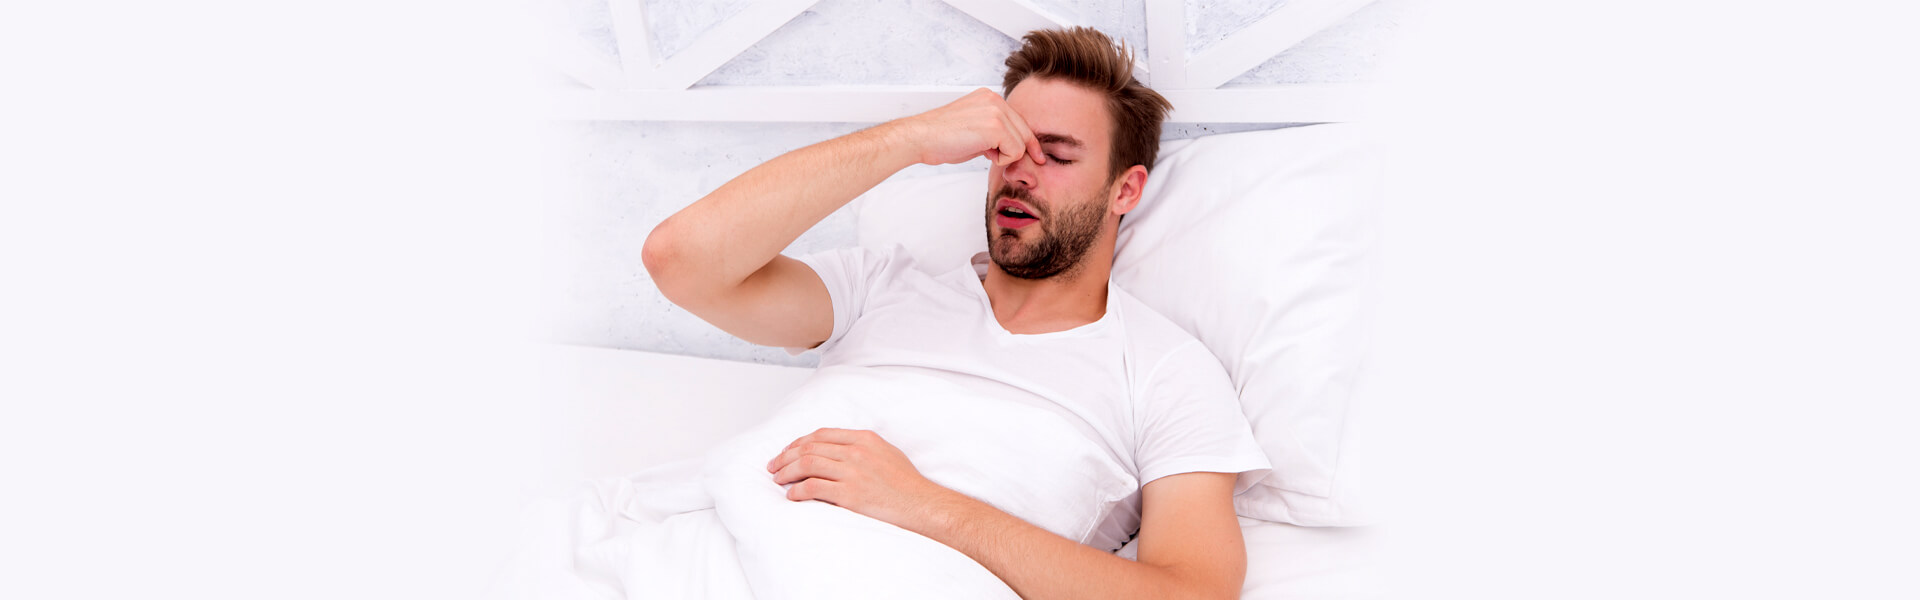 CPAP v. Oral Appliance: Sleep Apnea Treatment Options